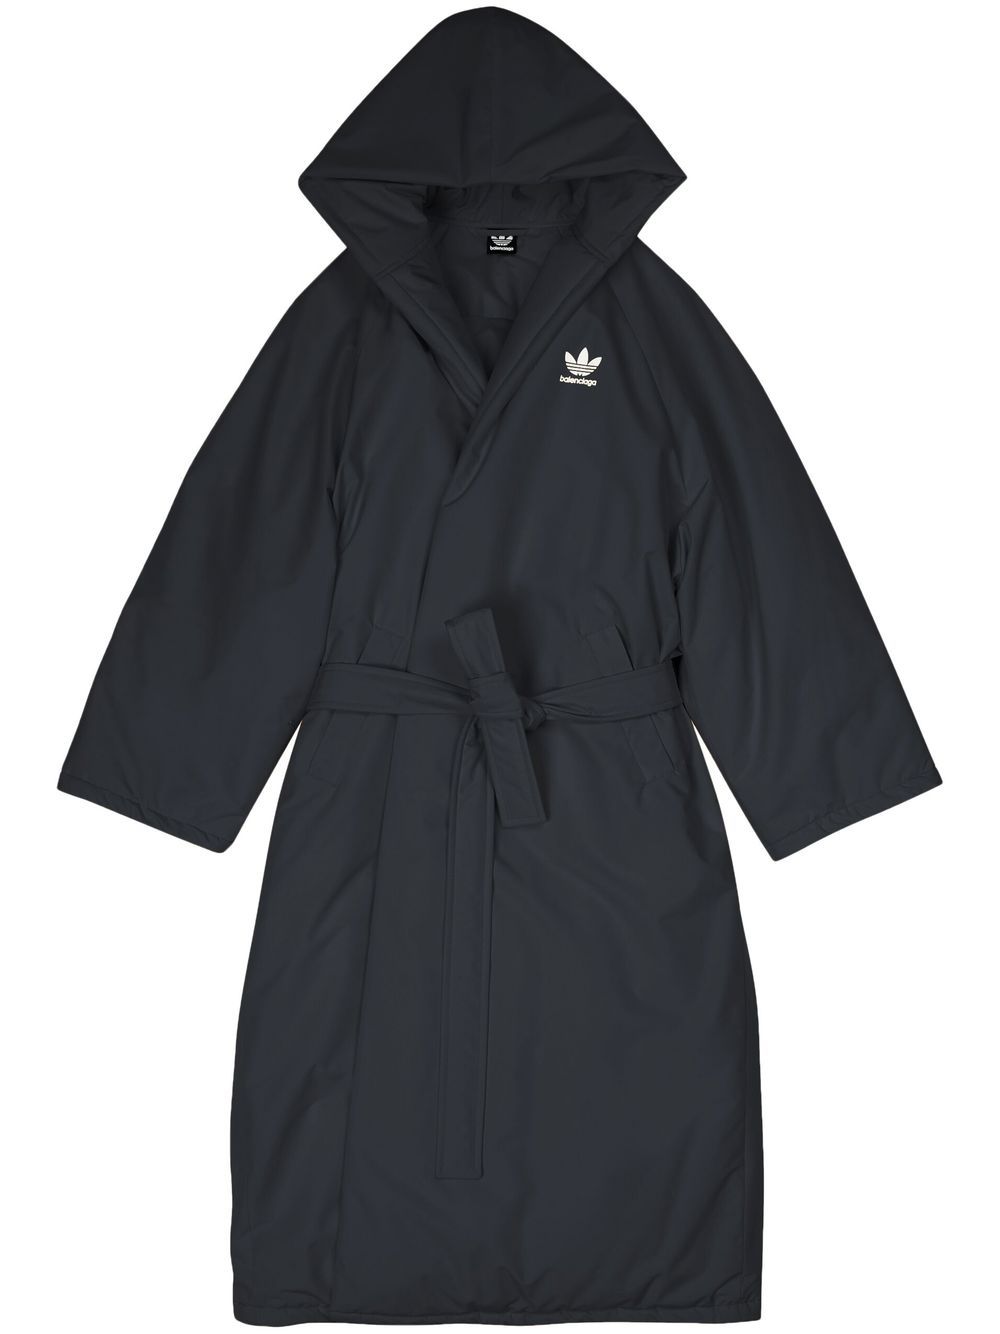 Balenciaga x Adidas logo-embroidered robe coat - Black